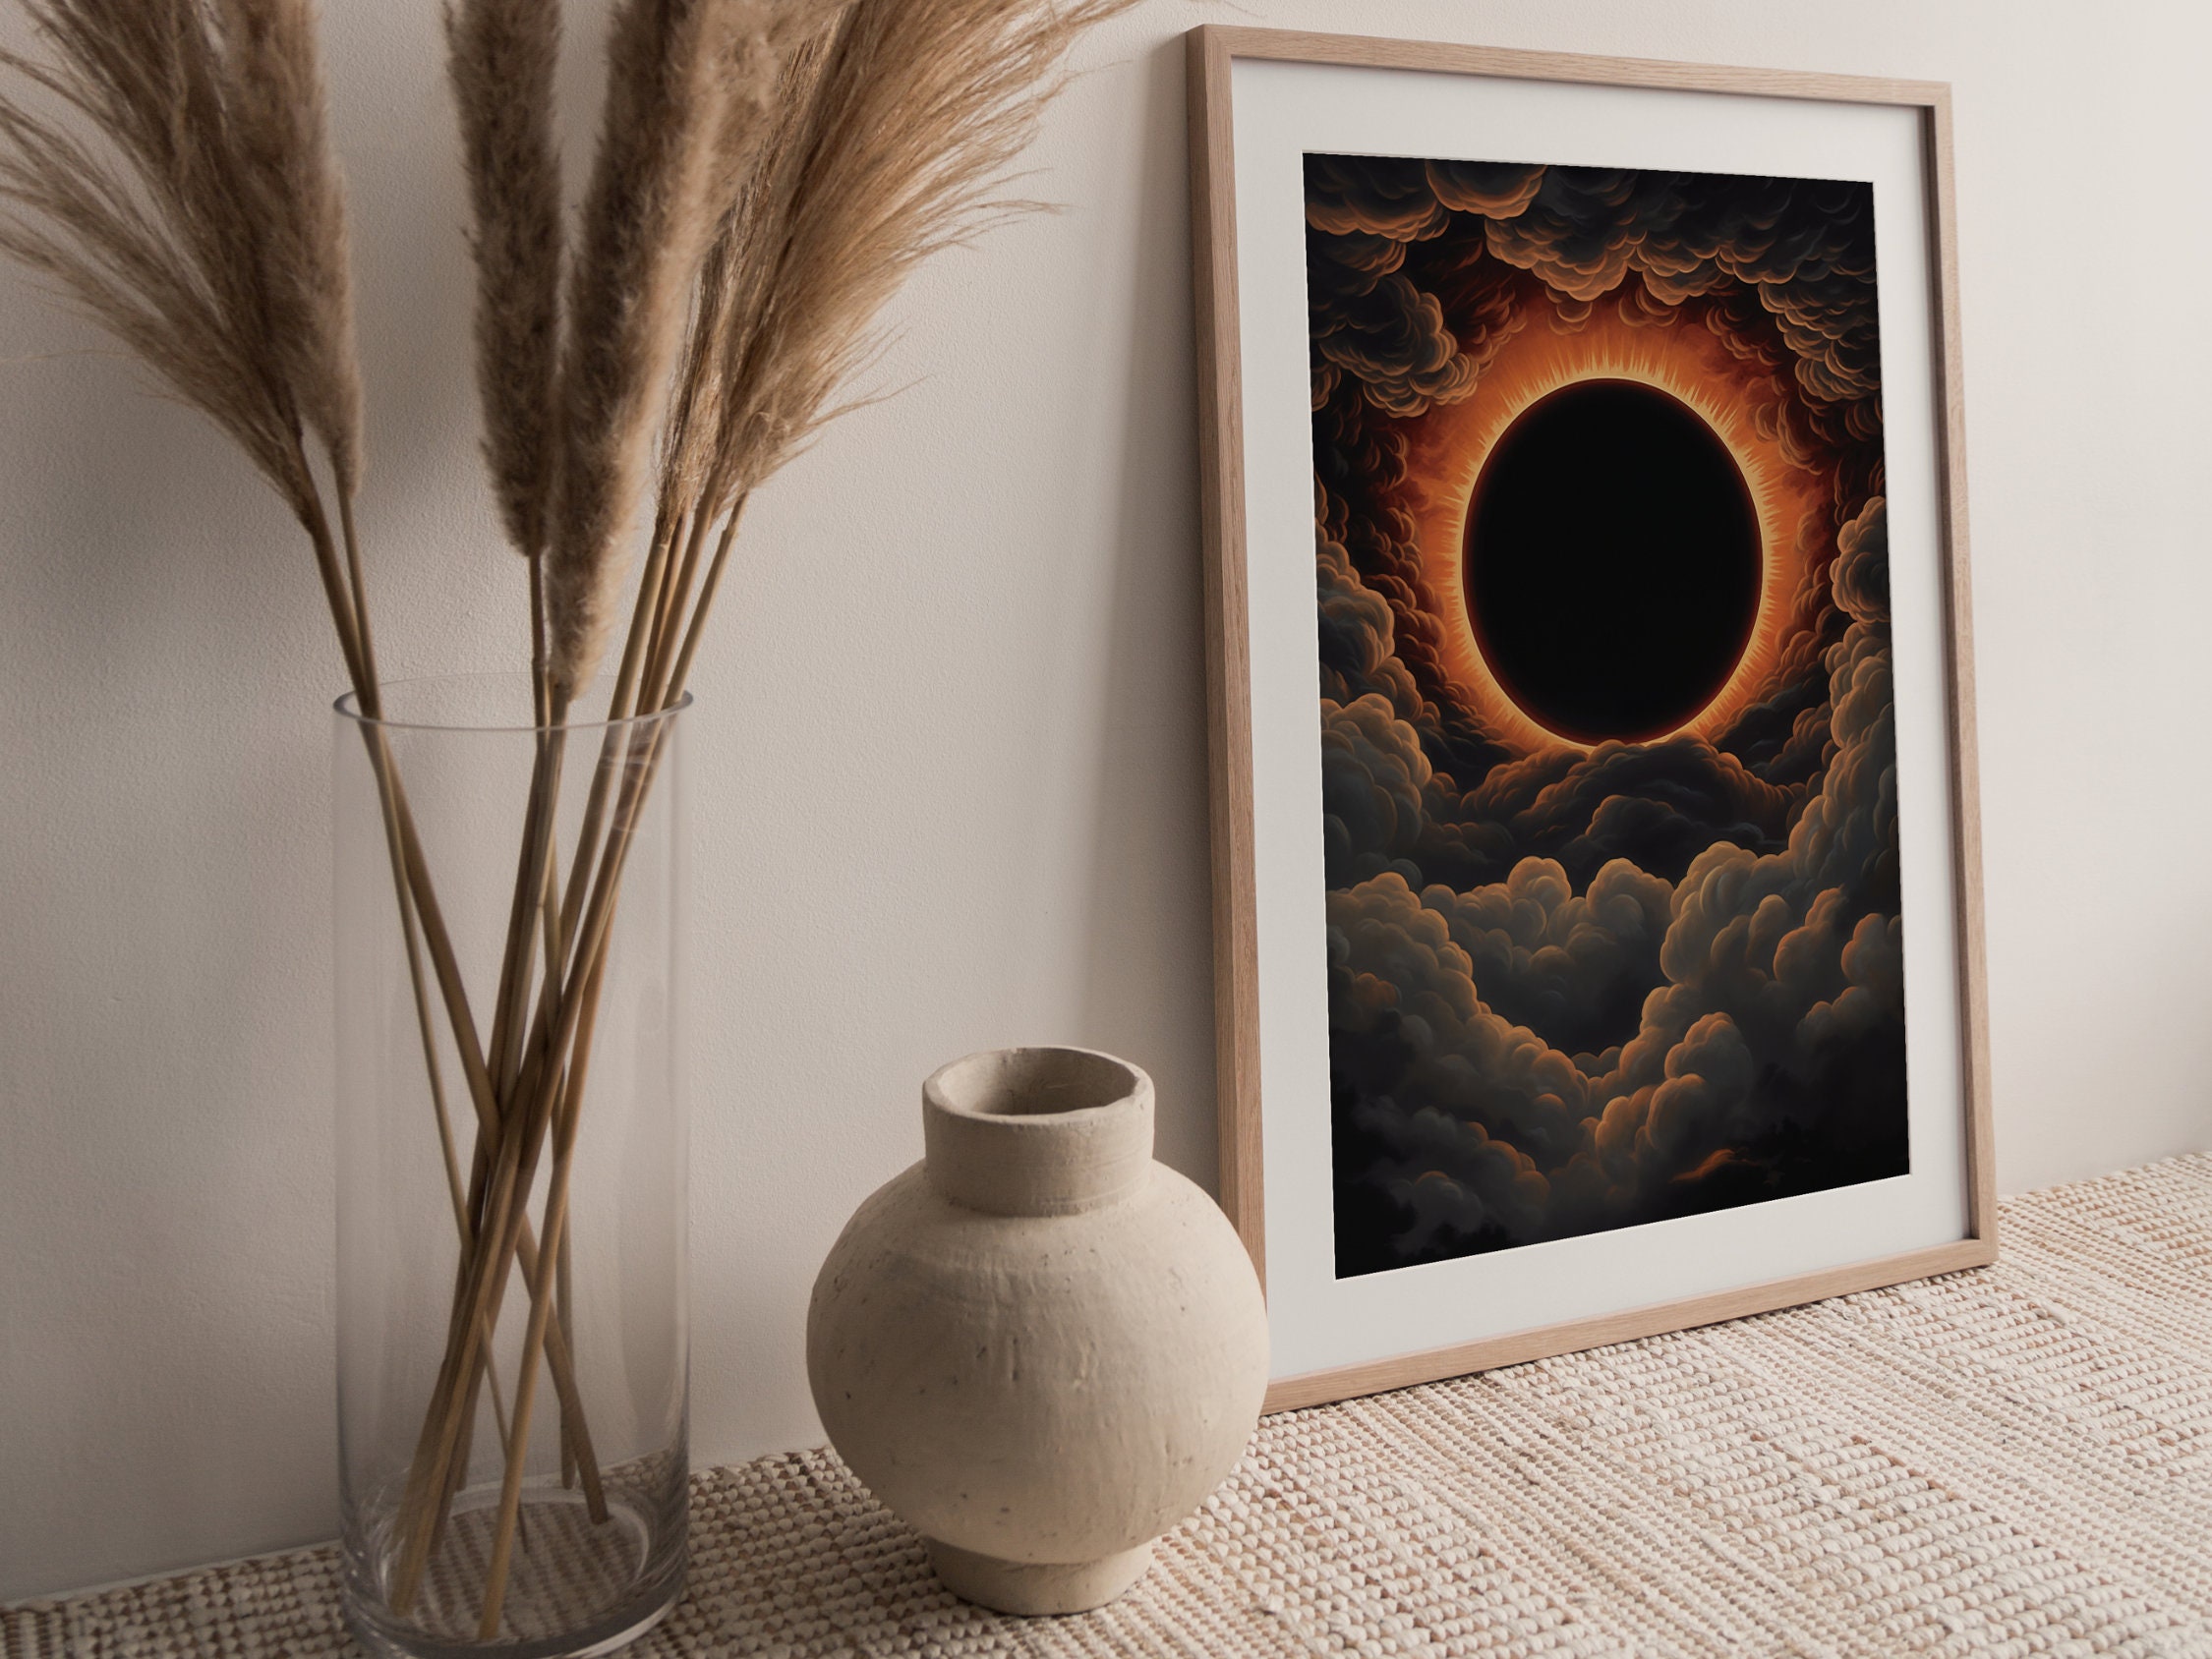 Celestial Solar Eclipse Vintage Painting Poster